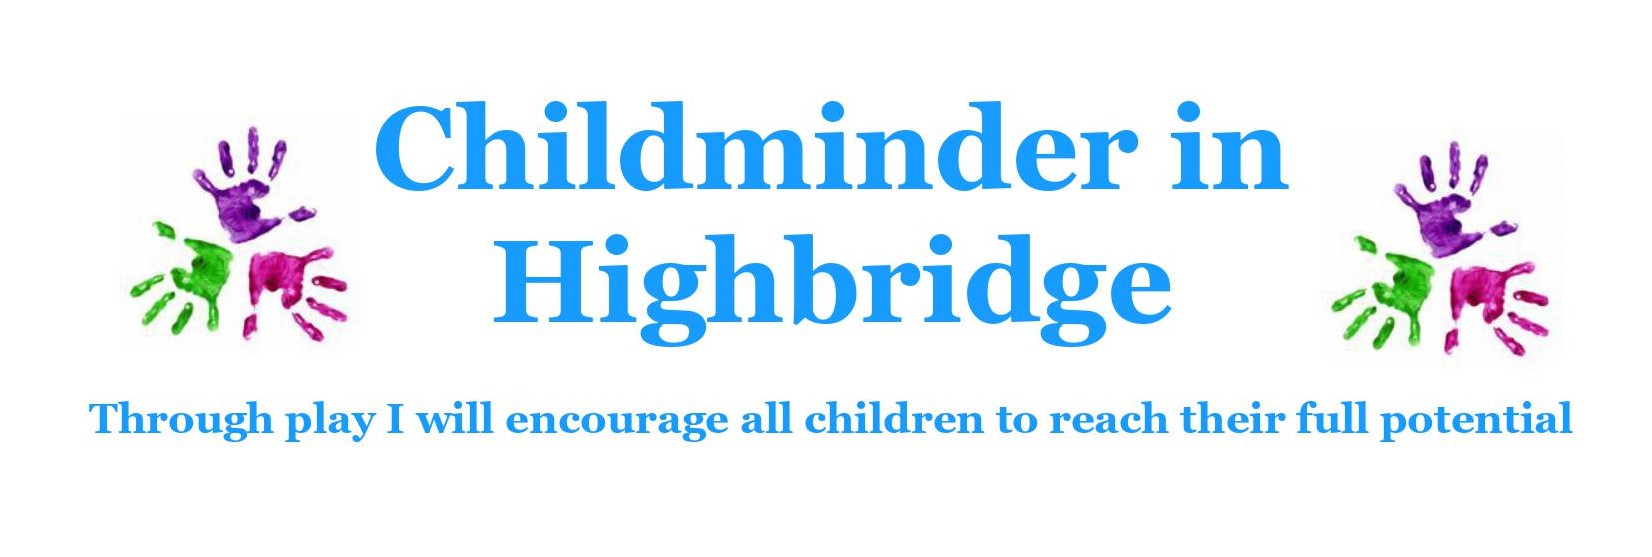 Childminder in Highbridge